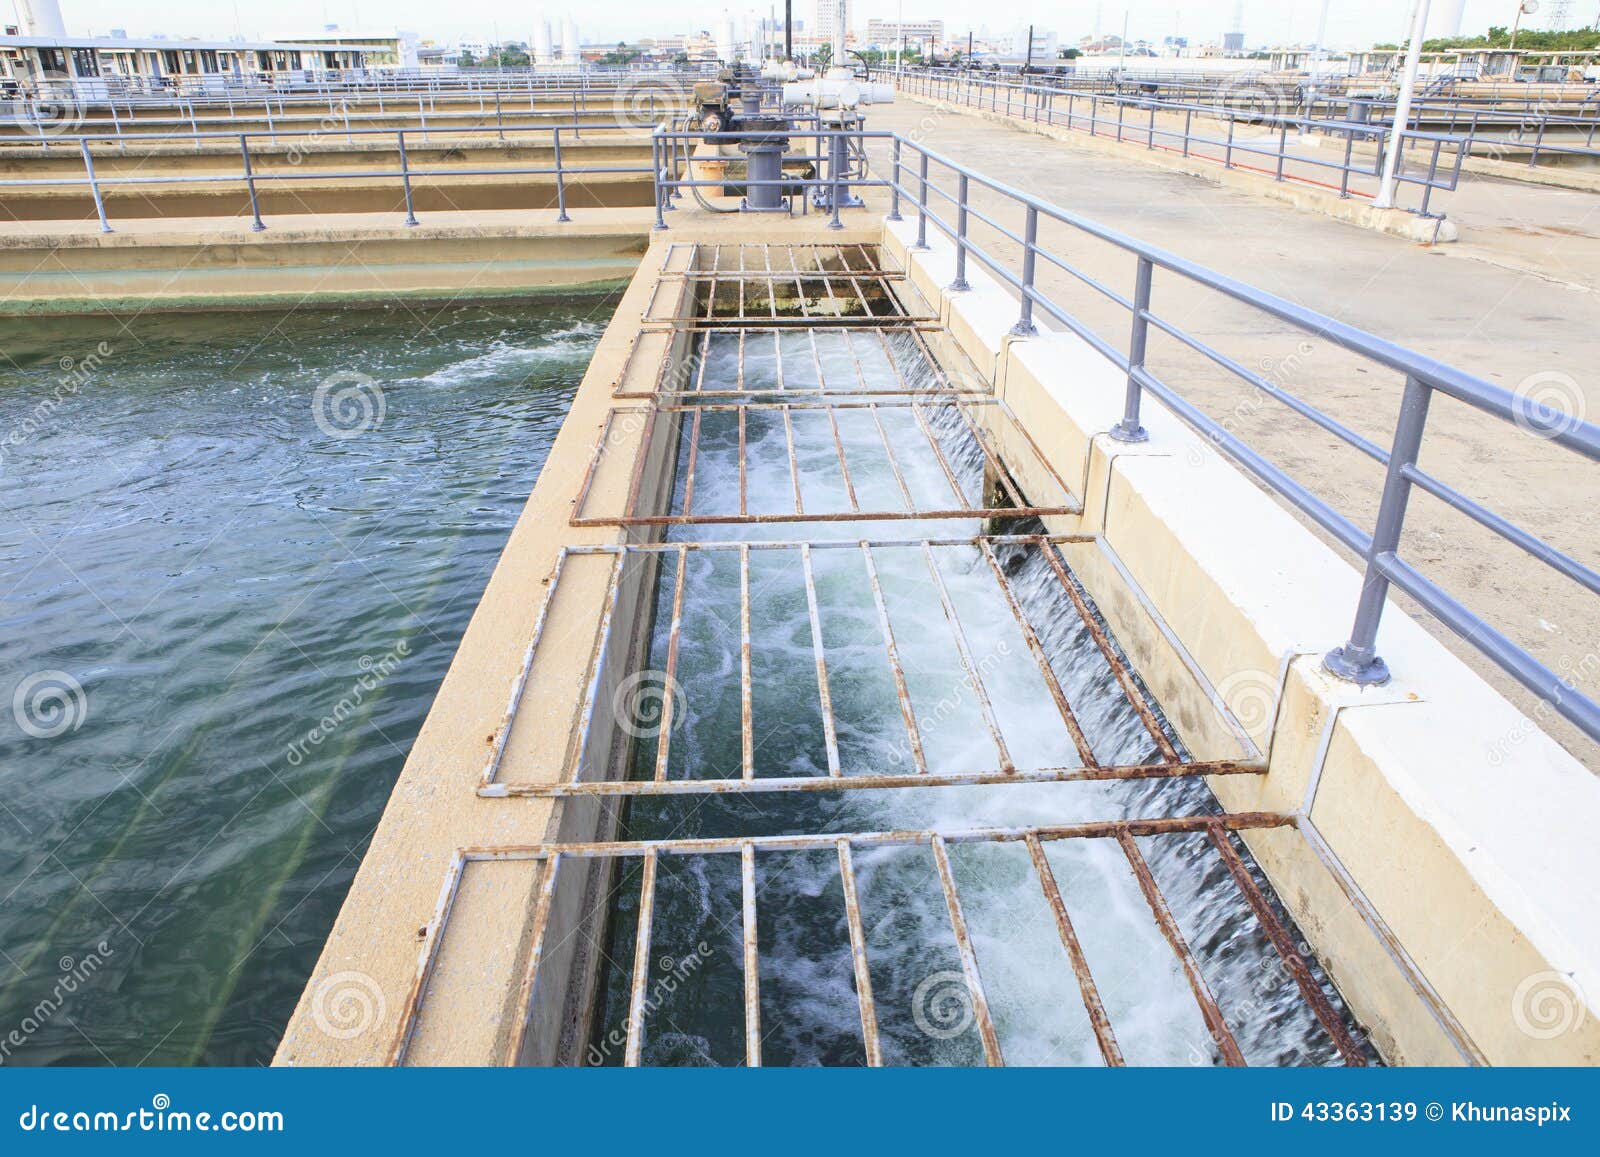 pure and clean water flowing in waterworks industry estate